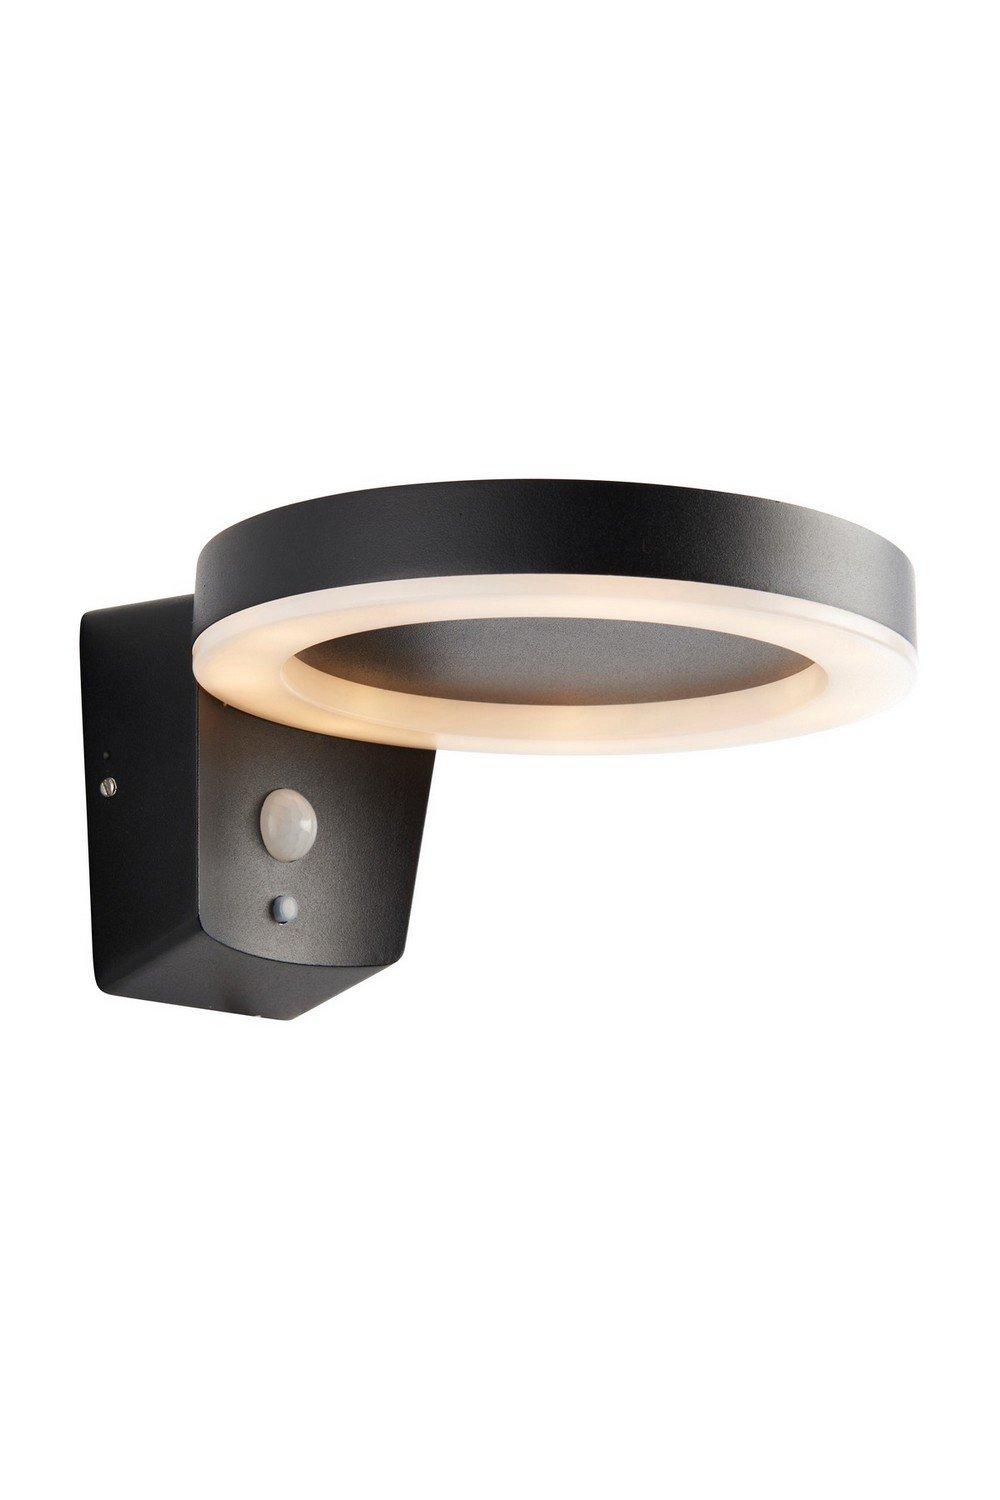 Ebro Modern Solar Powered Round Ring LED Wall Lamp Textured Black PIR Motion & Day Night Sensors War